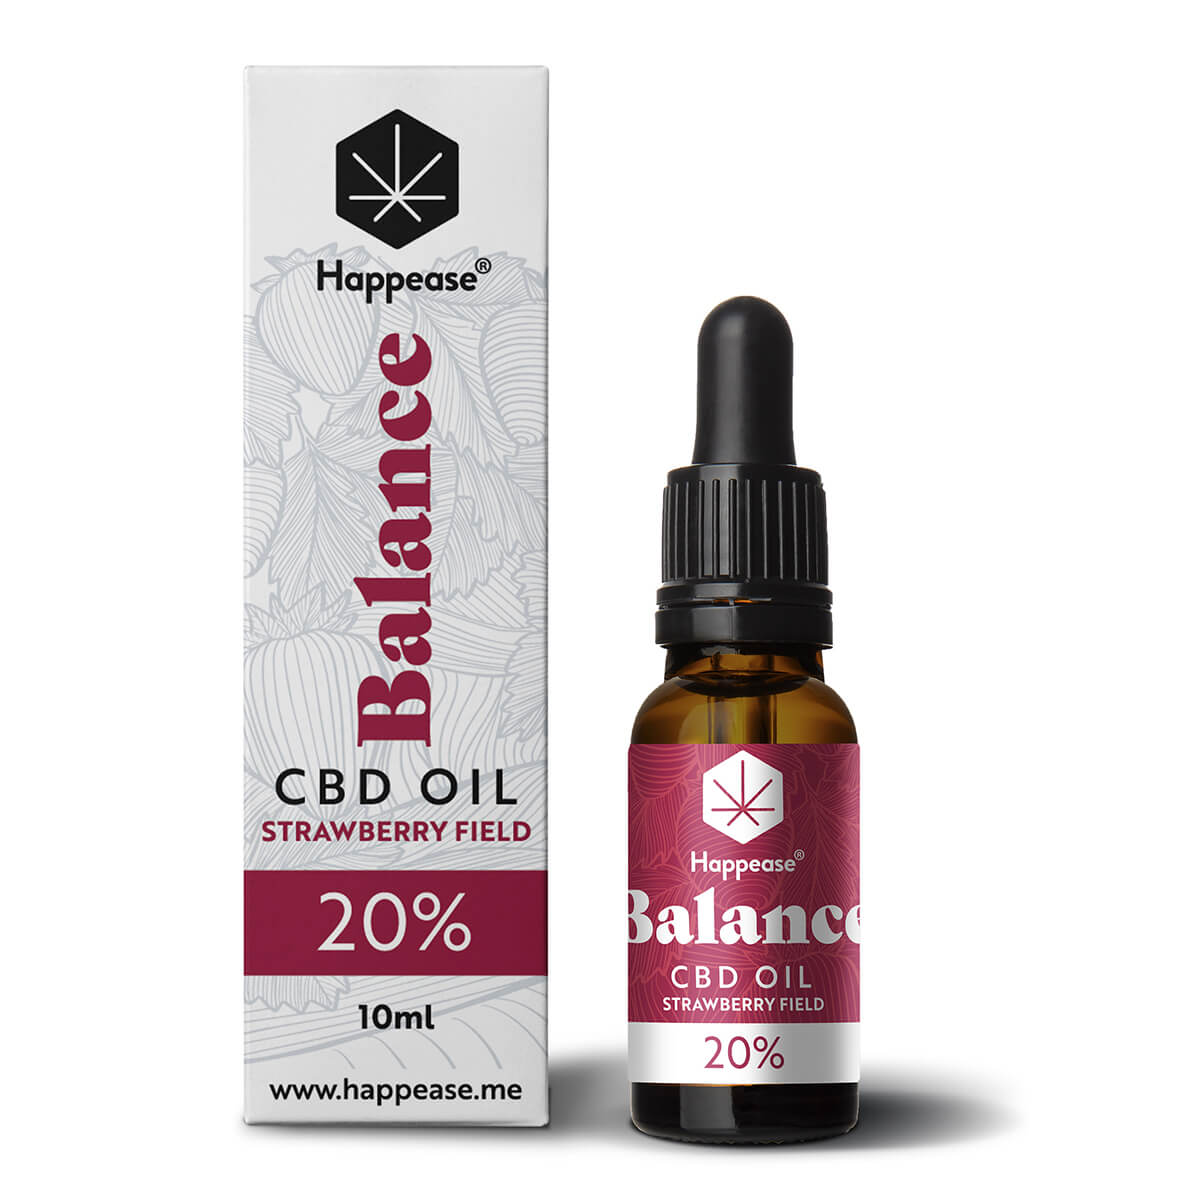 Happease Balance 20% CBD Oil Strawberry Field (10ml)